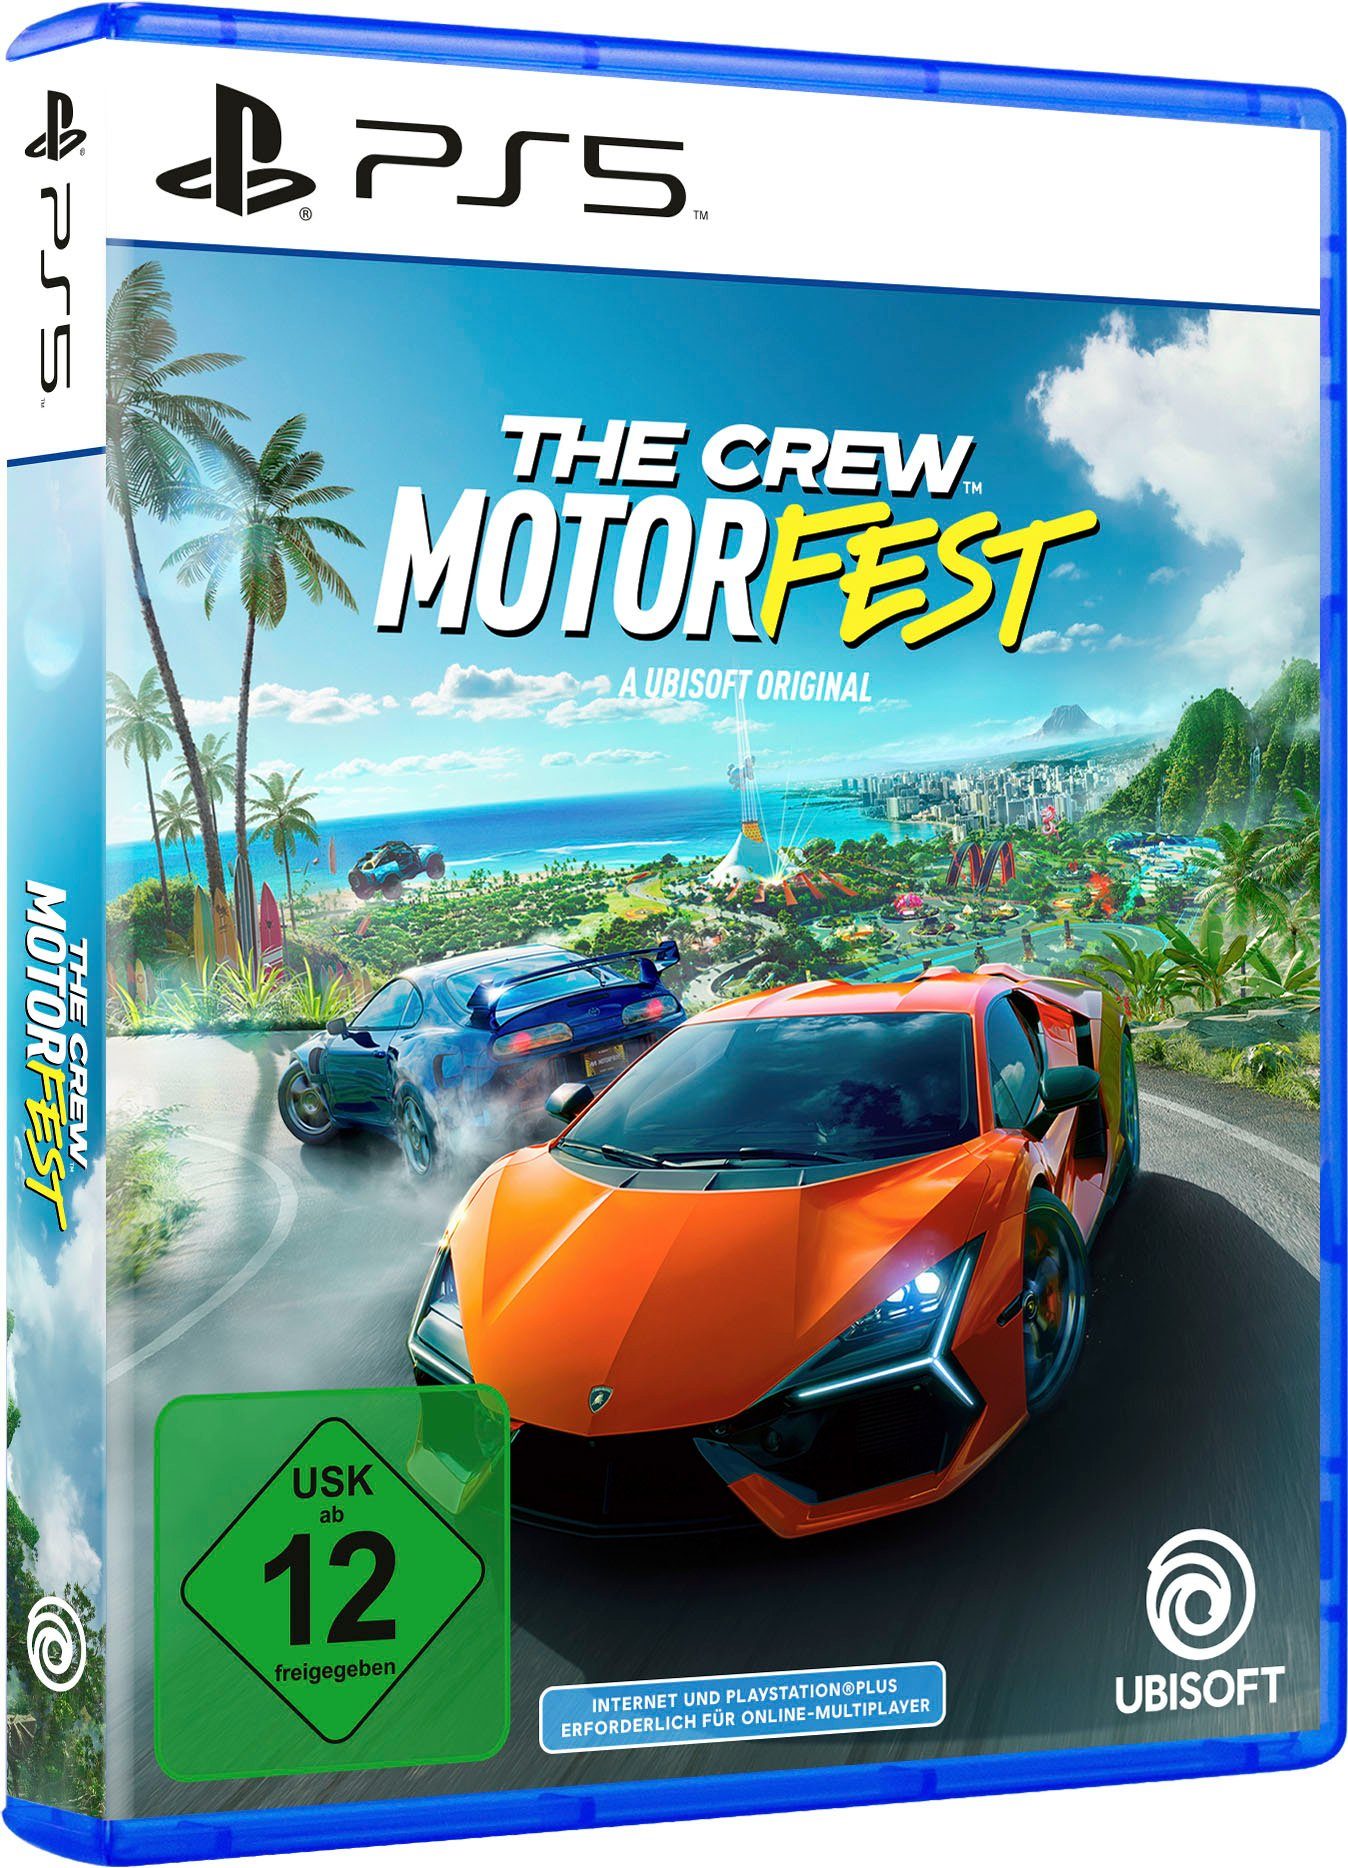 5 Standard UBISOFT Edition Motorfest PlayStation Crew™ The